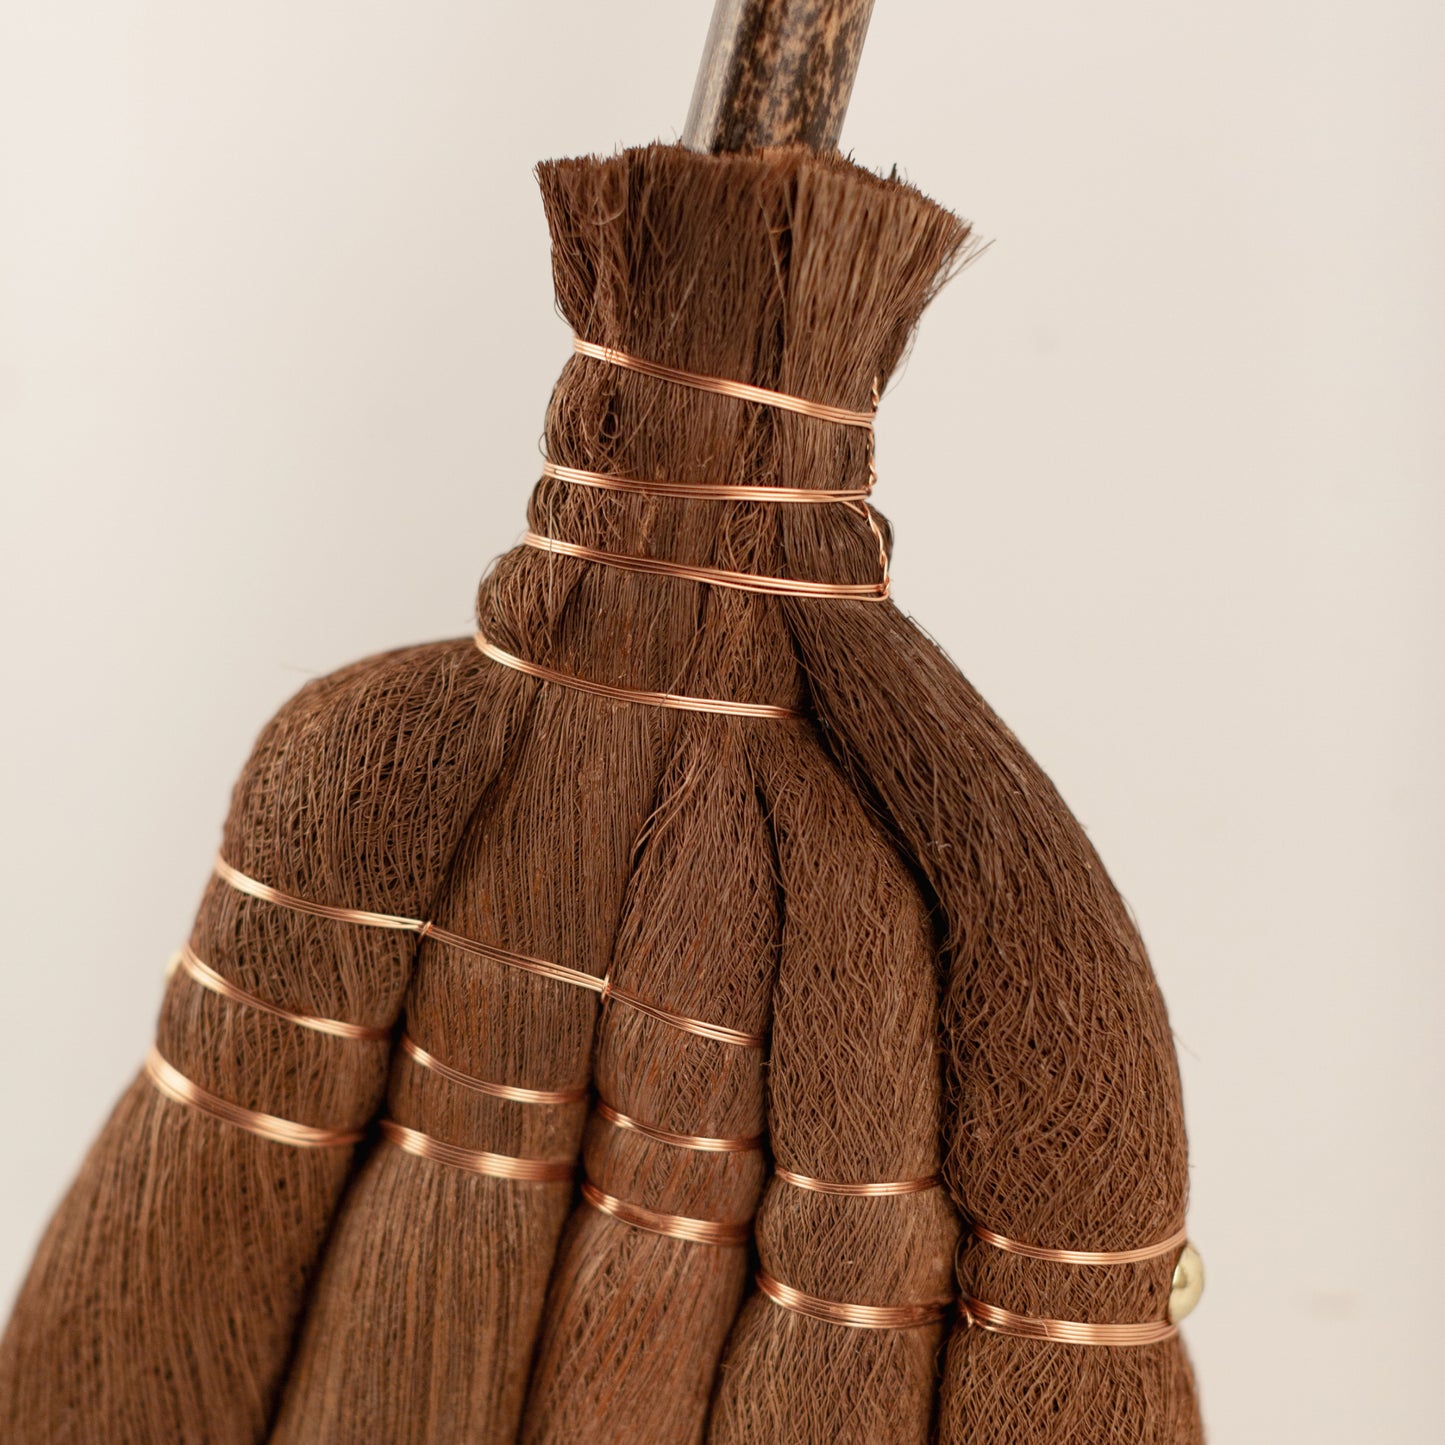 Shuro Slanted Broom - 5-bundles